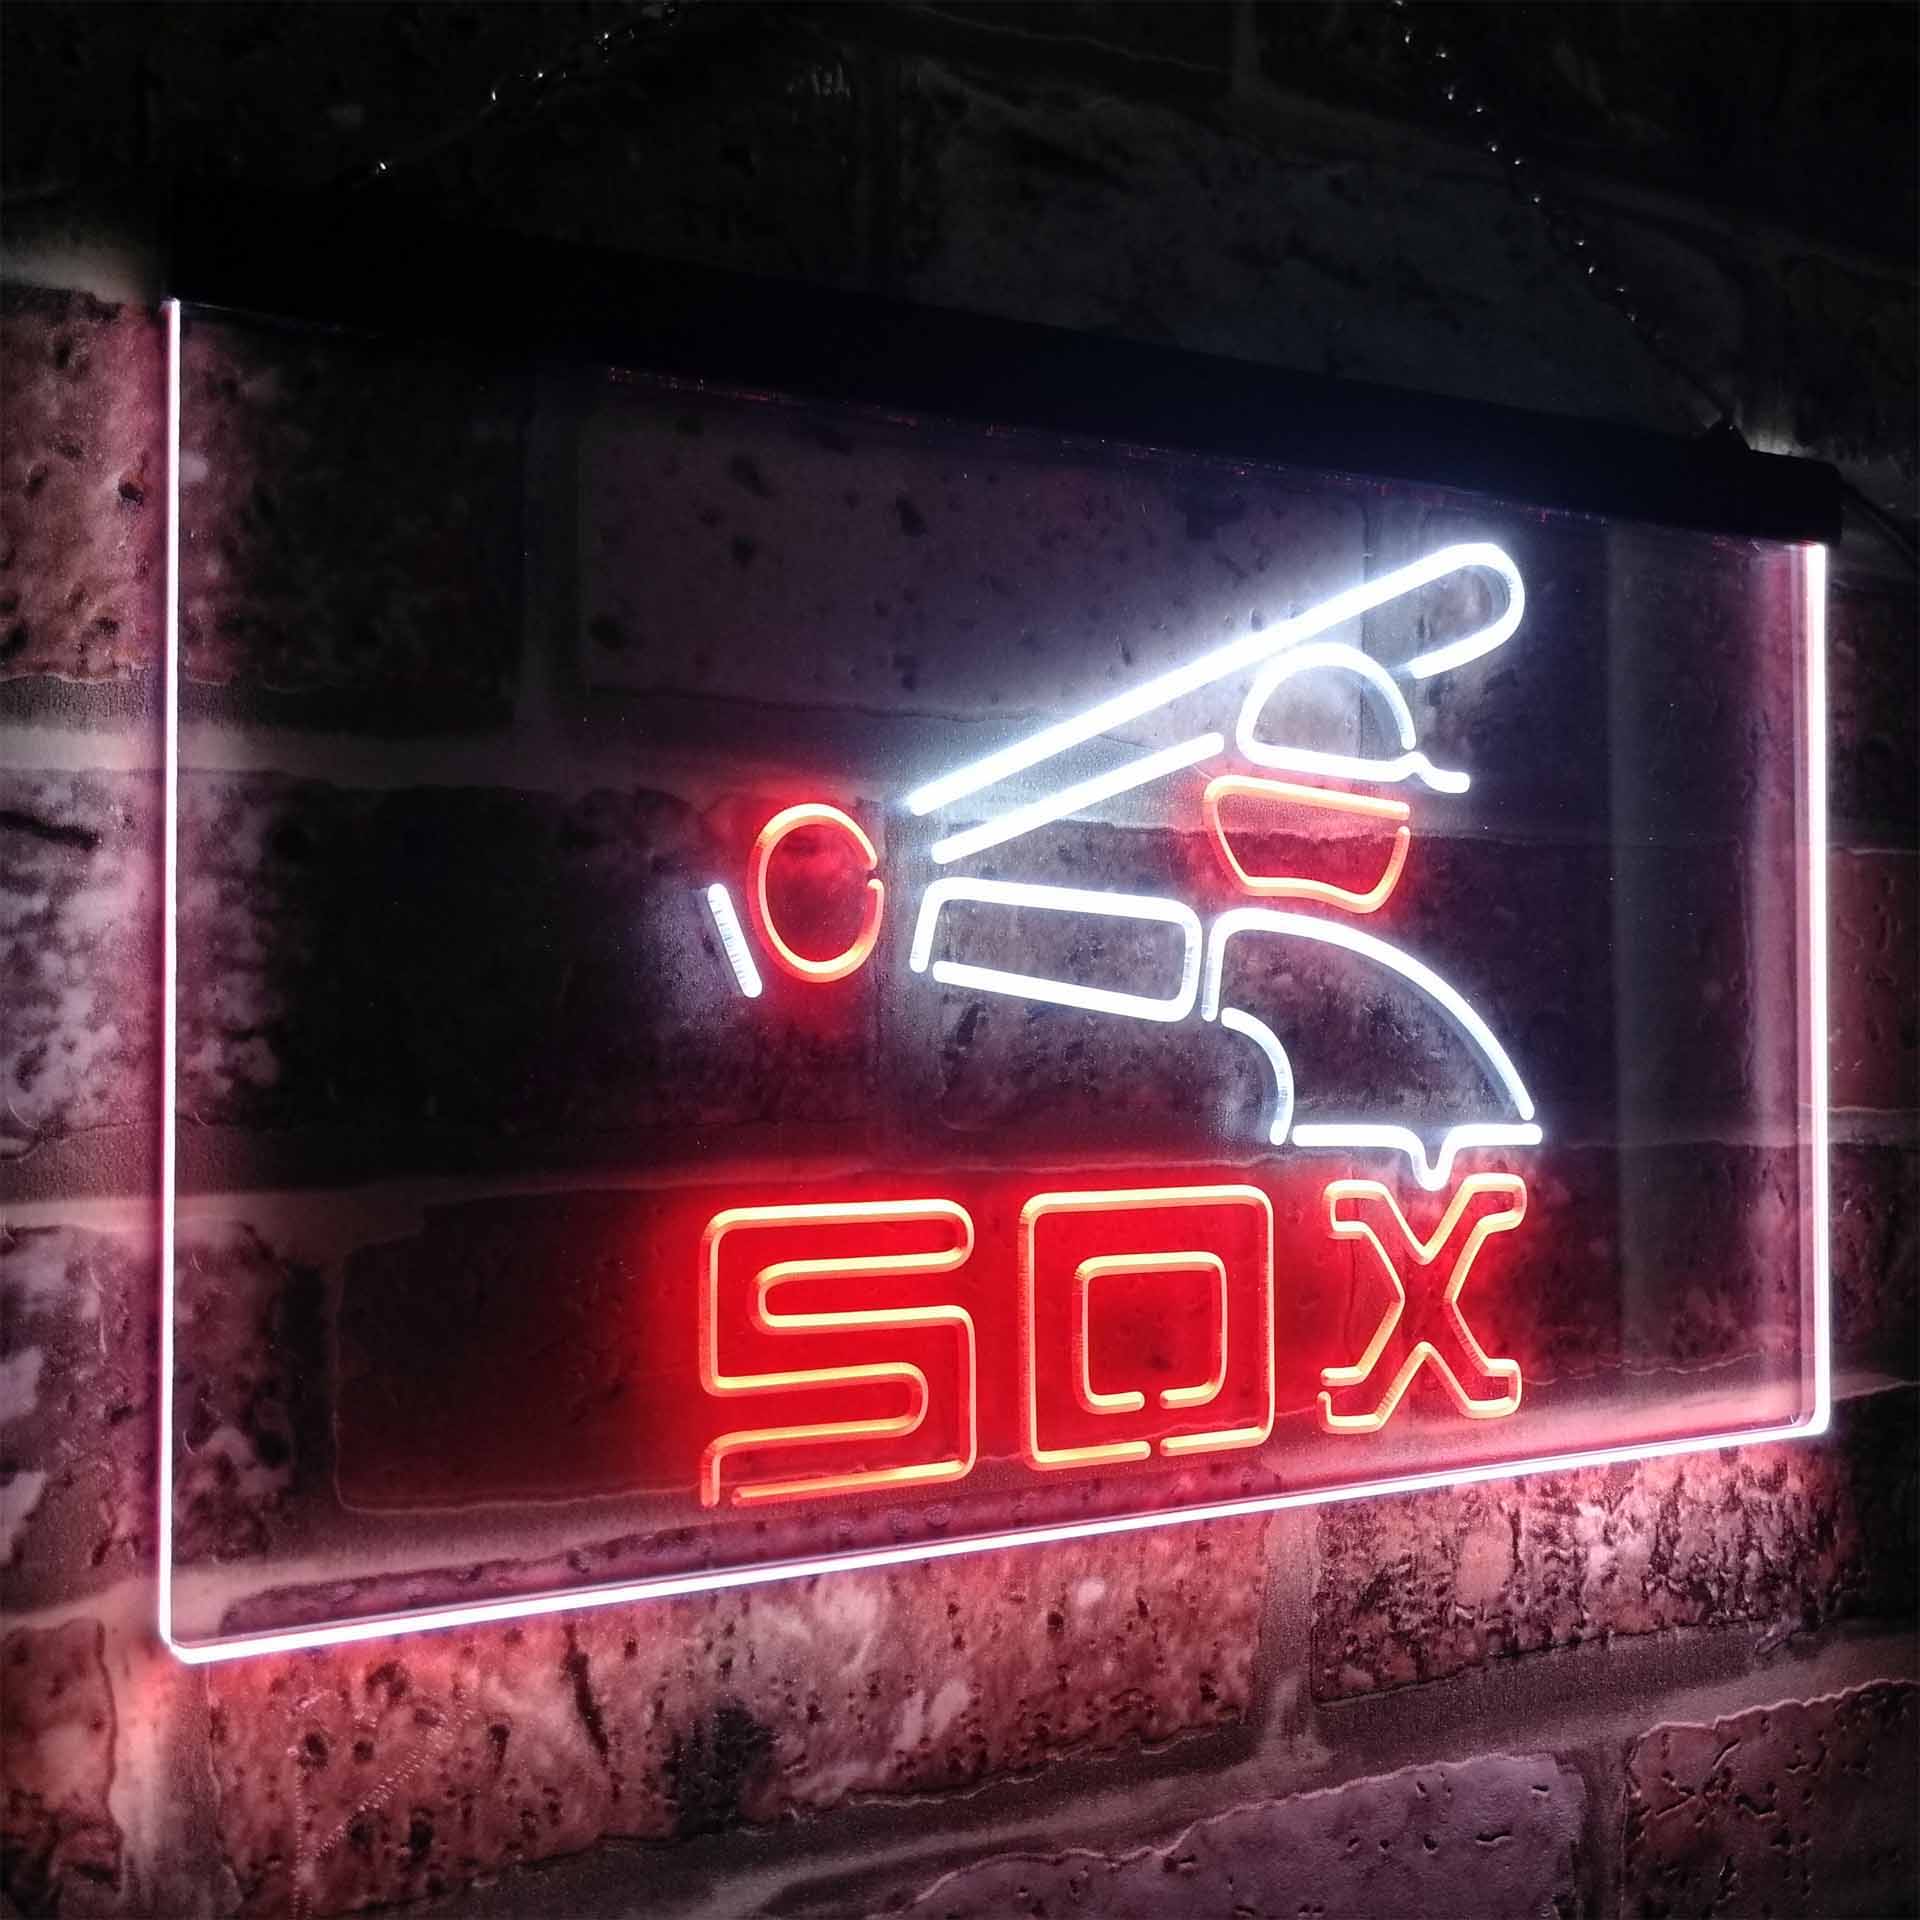 Chicago White League Club Soxs Souvenir Throwback LED Neon Sign